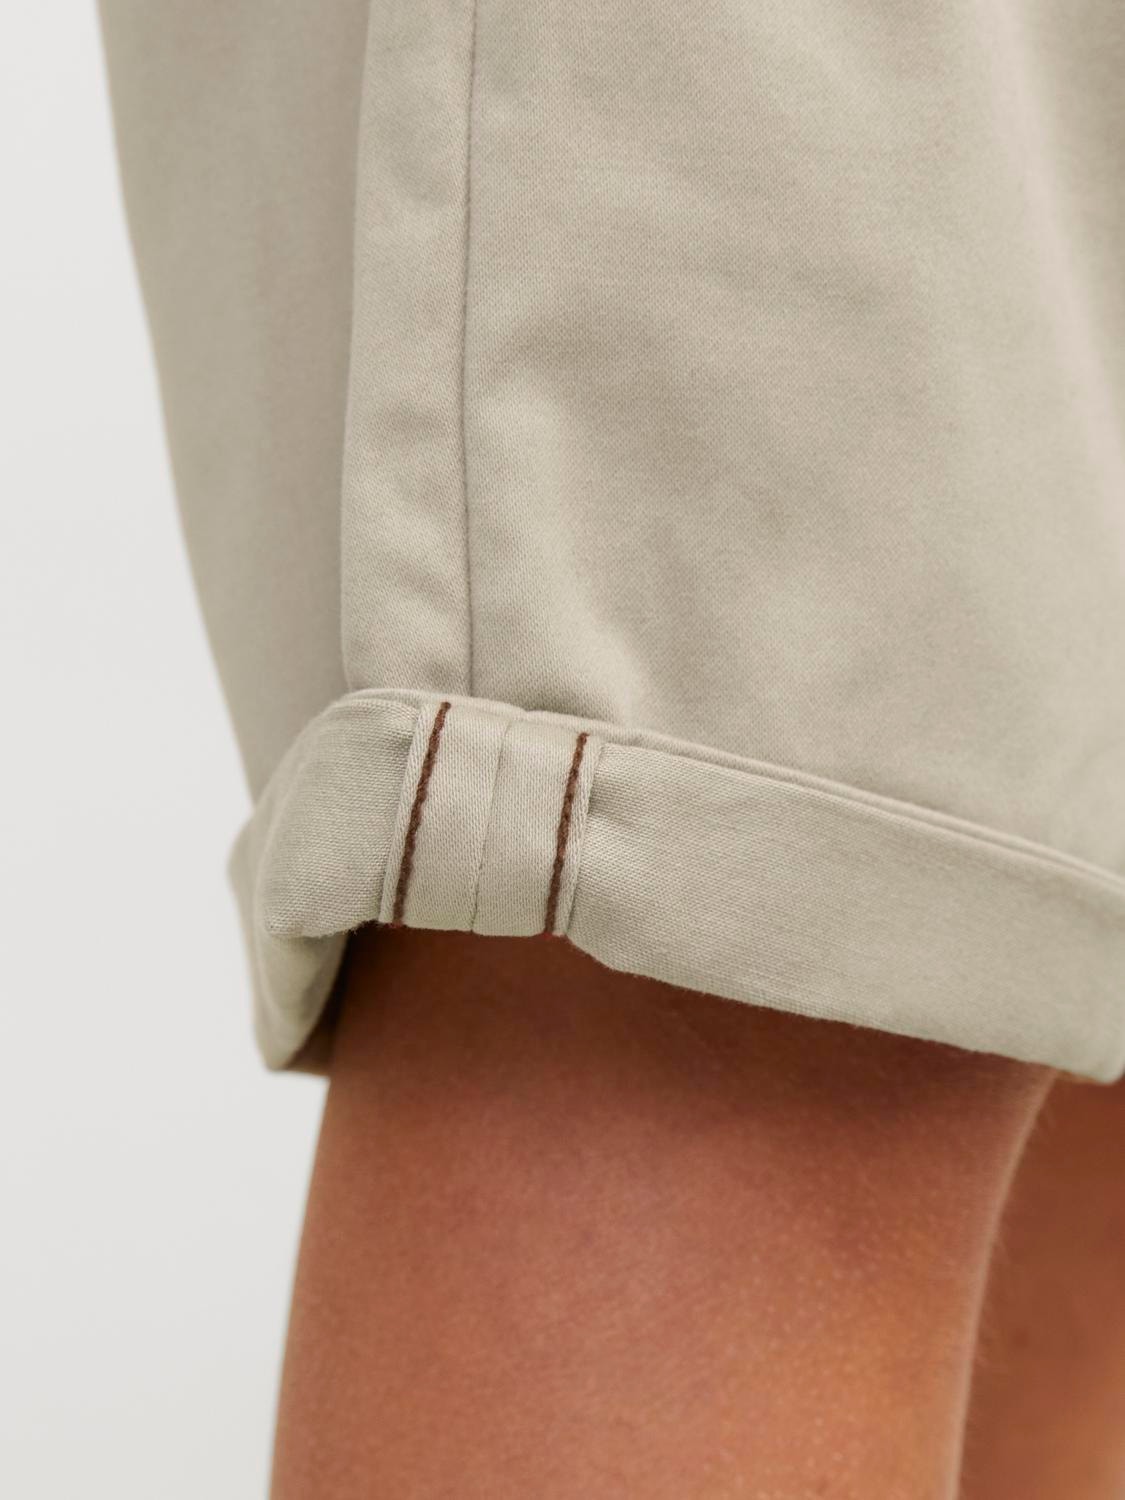 Jack & Jones Regular Fit Chino shorts For boys -Crockery - 12172213